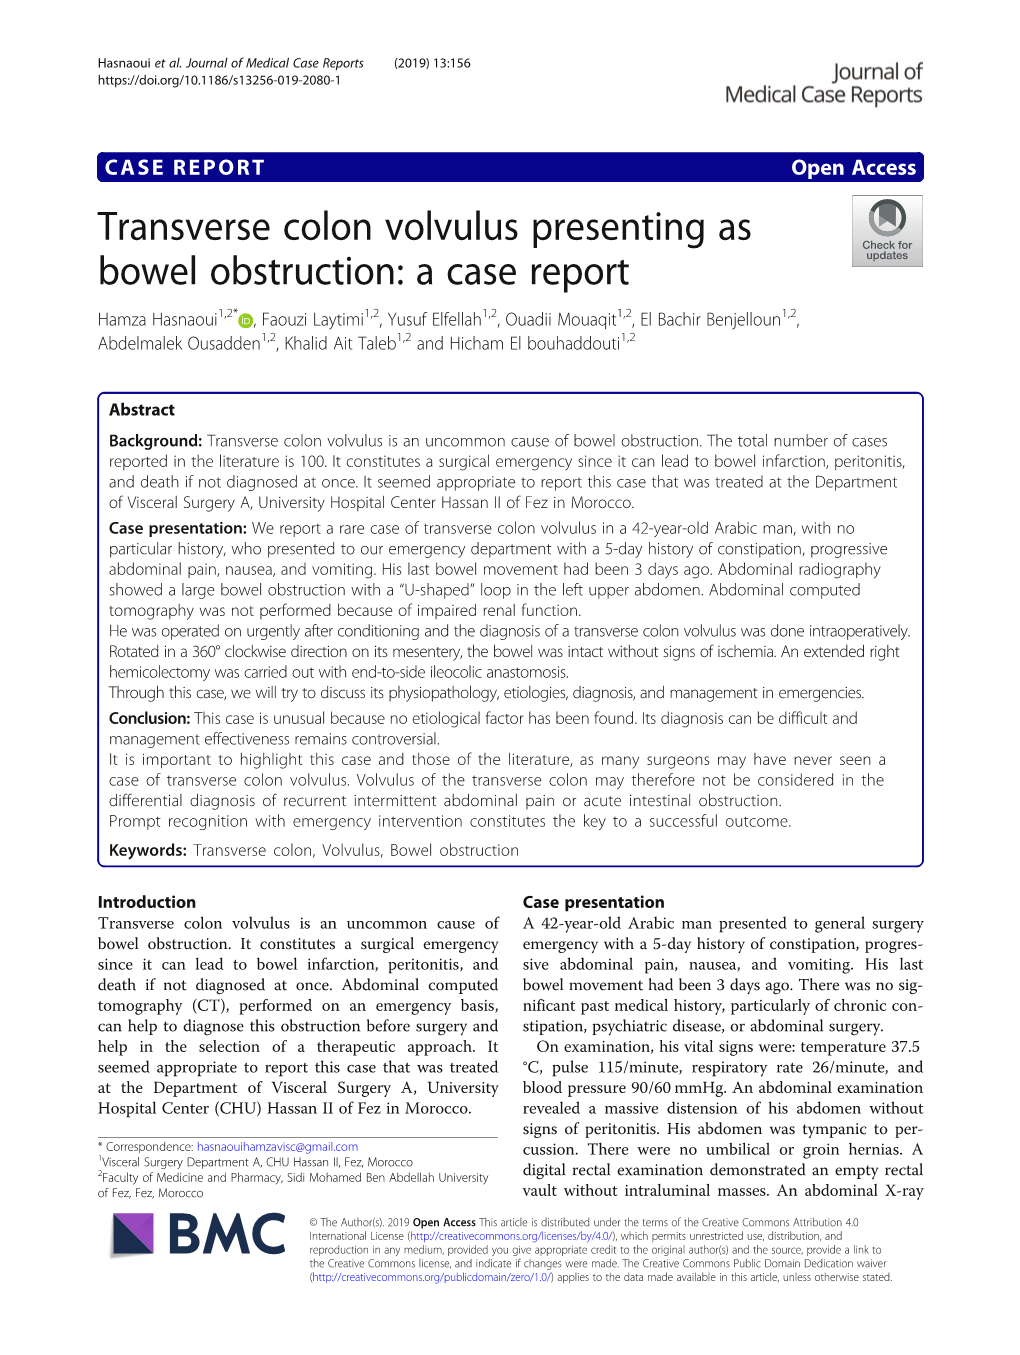 Transverse Colon Volvulus Presenting As Bowel Obstruction: a Case Report